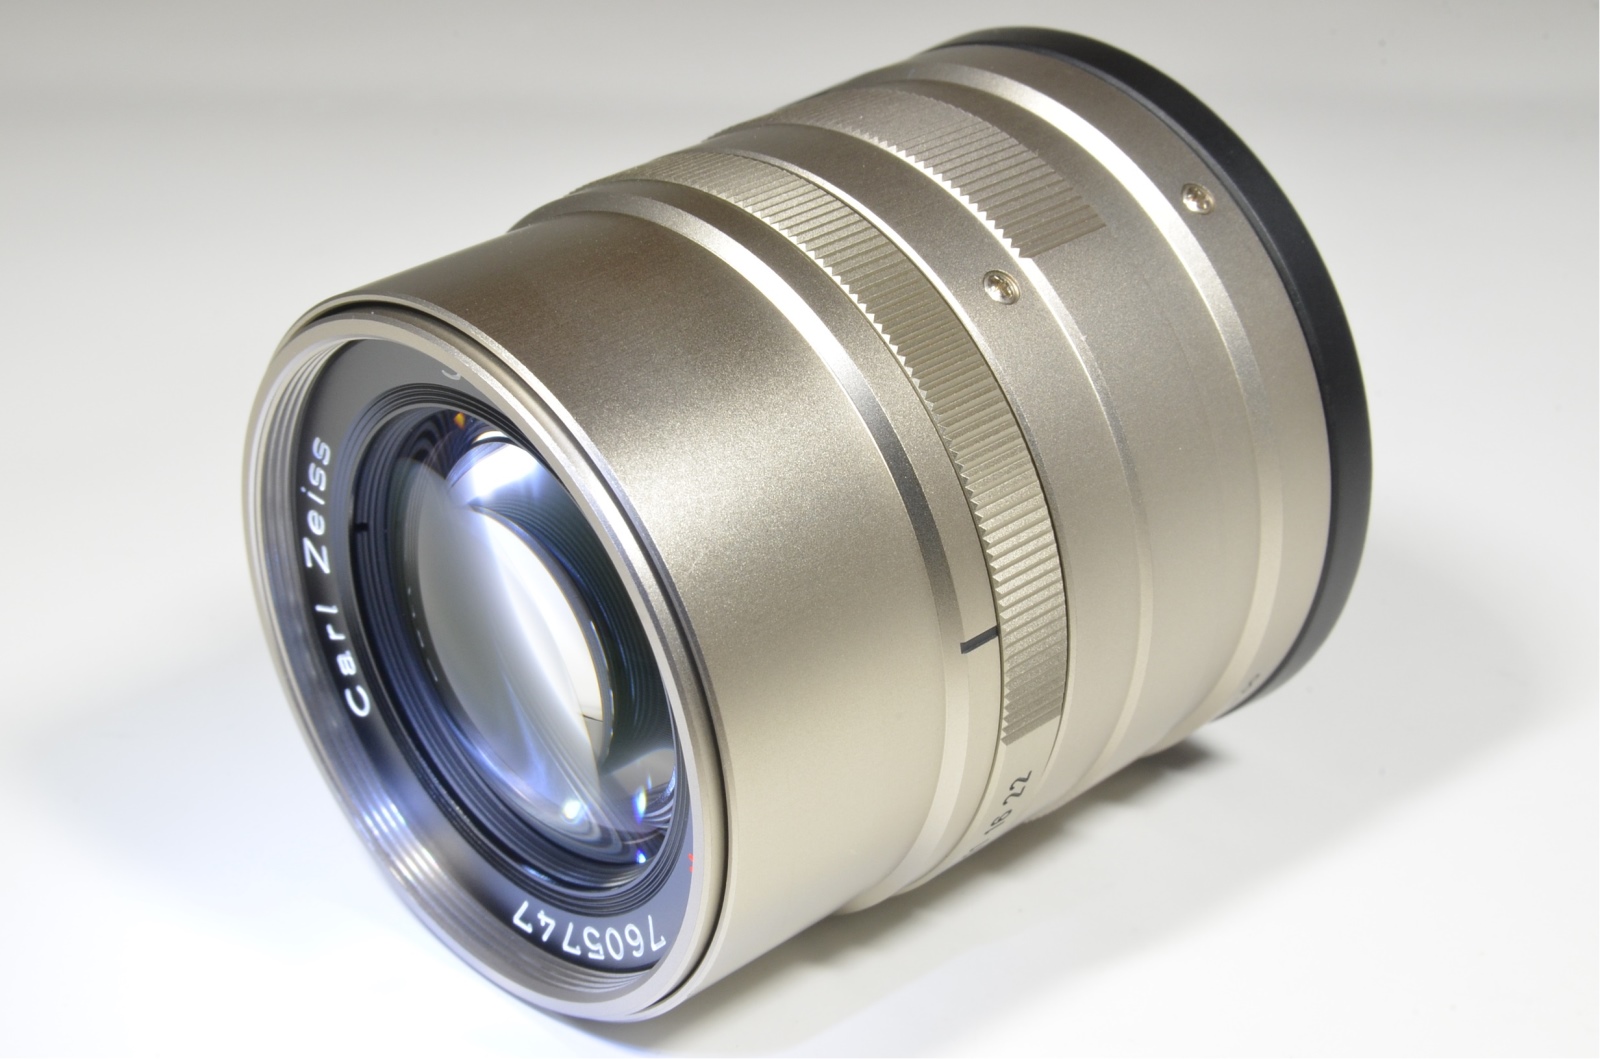 contax g2 camera / planar 45mm f2 / biogon 28 f2.8 / sonnar 90mm f2.8 / tla200